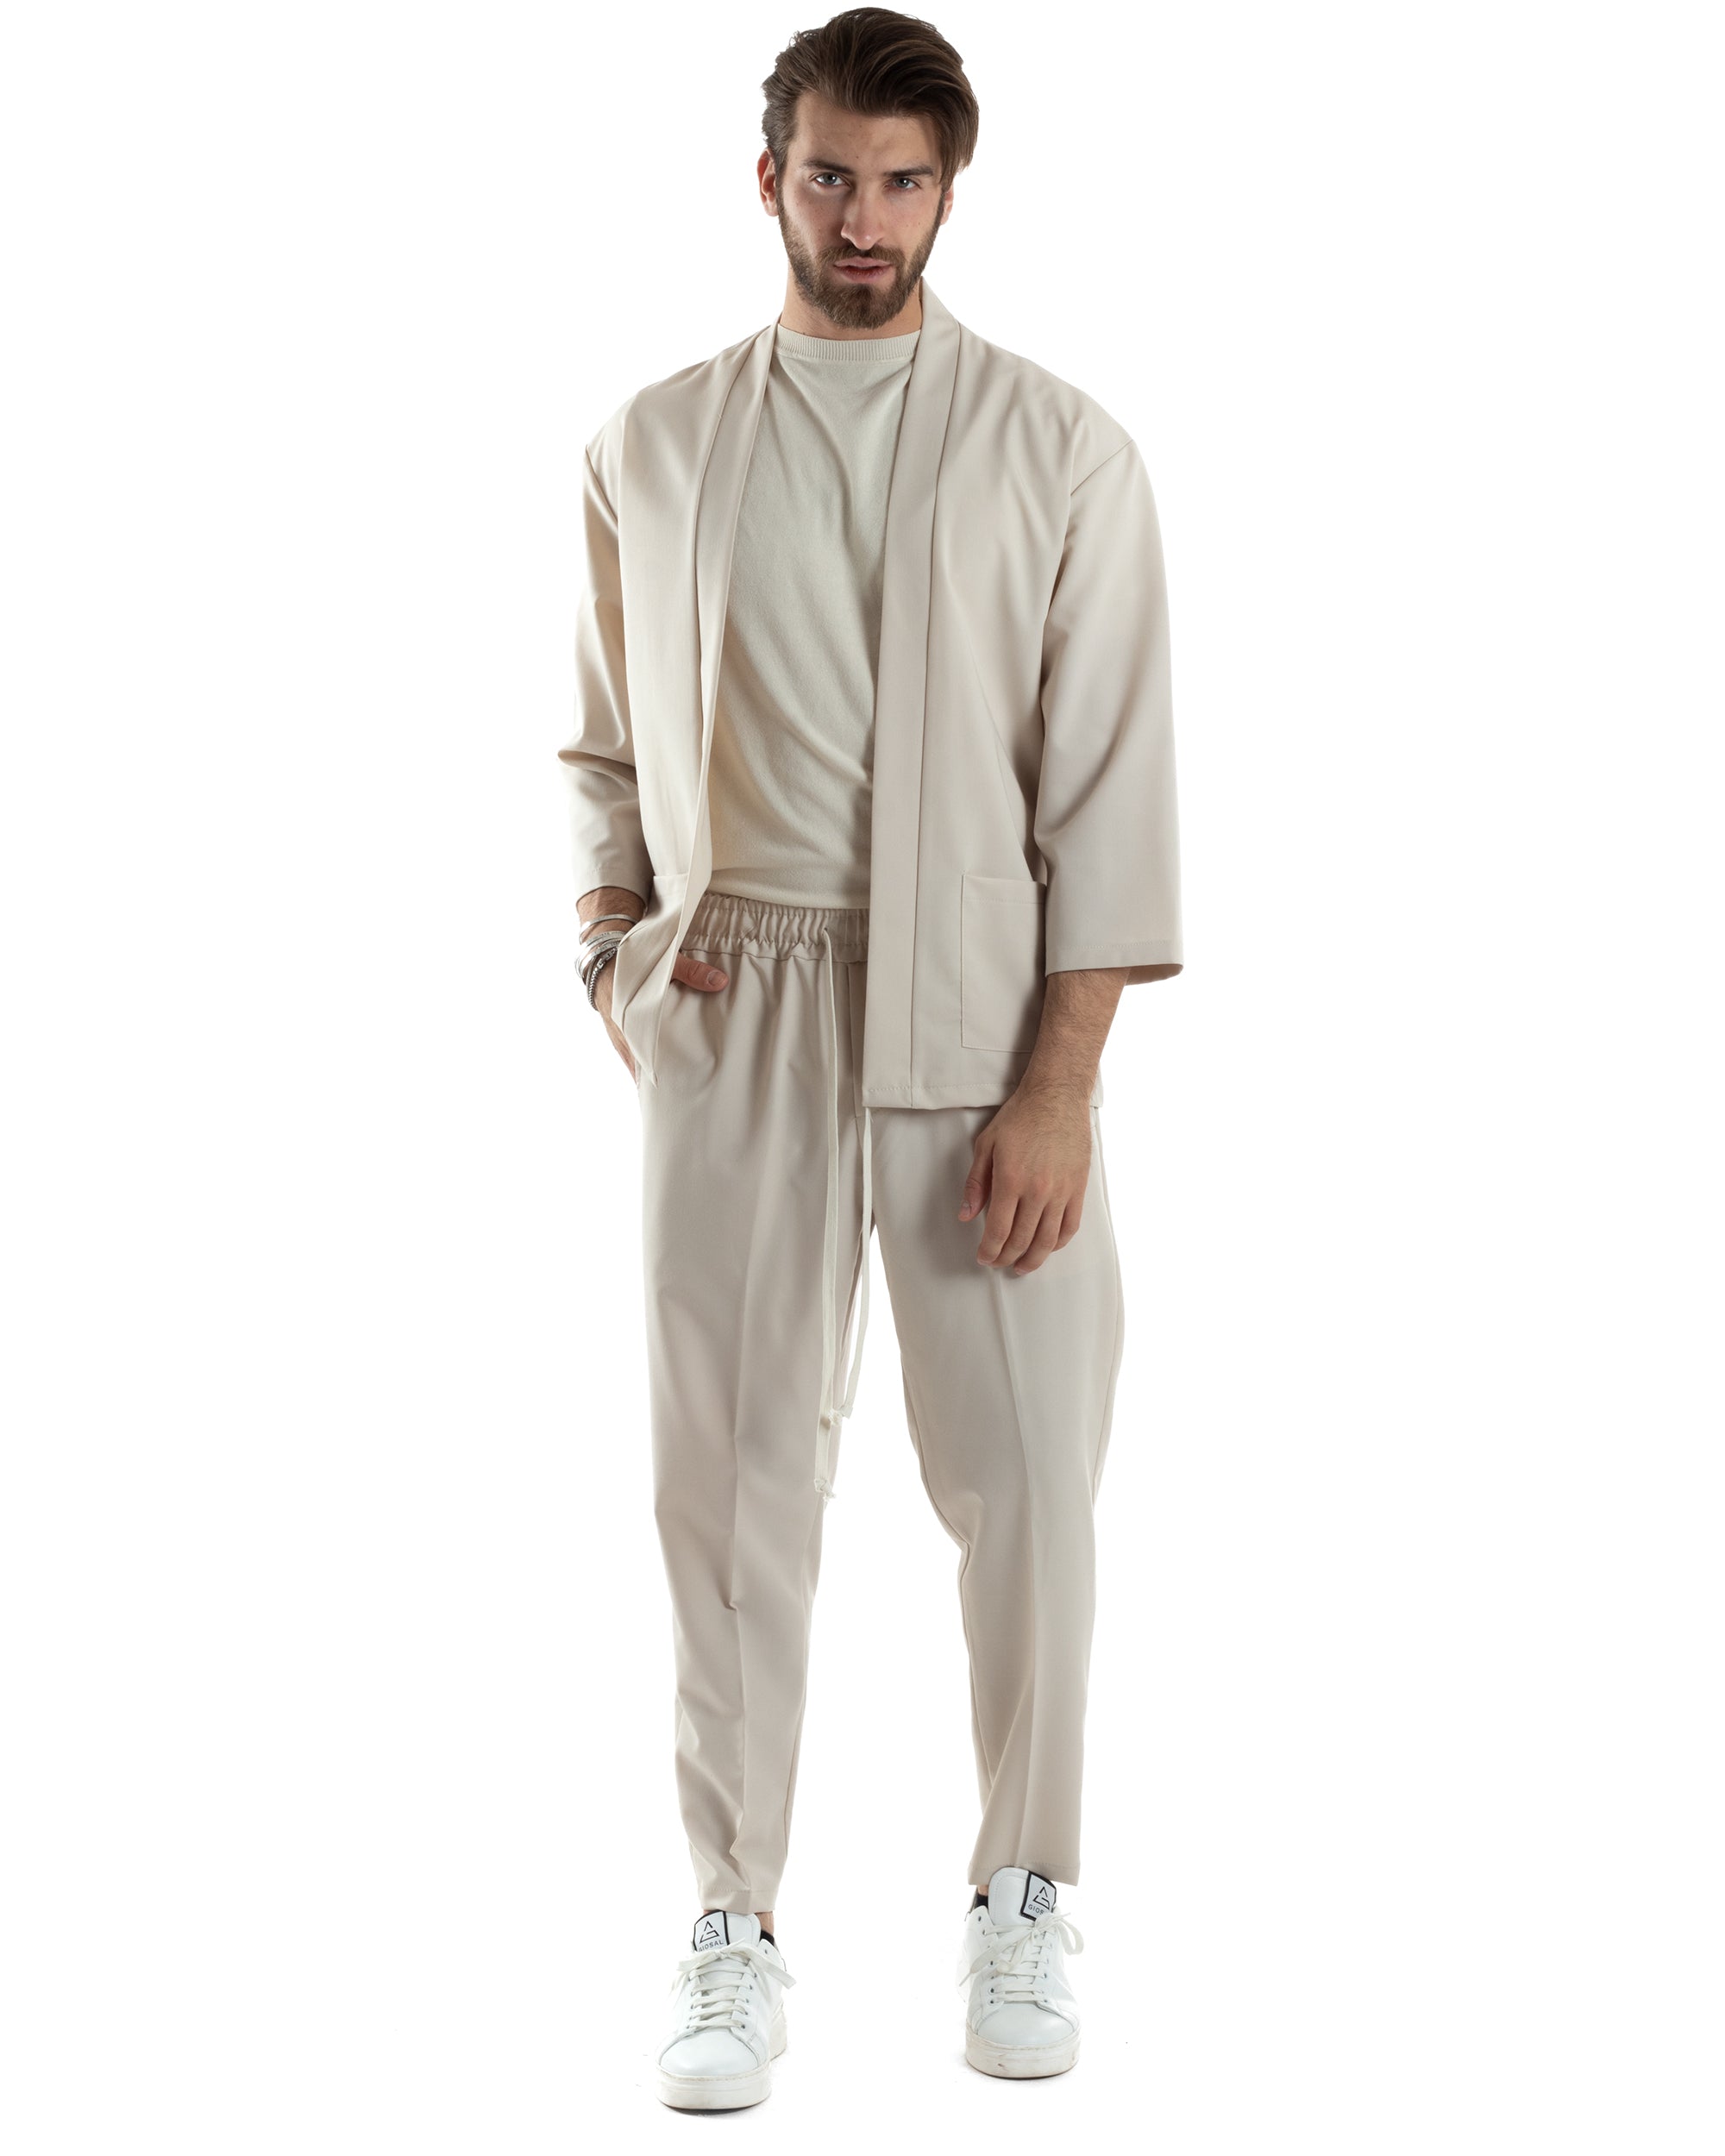 Completo Set Coordinato Uomo Viscosa Giacca Kimono Pantaloni Beige Casual Elegante GIOSAL-OU2446A